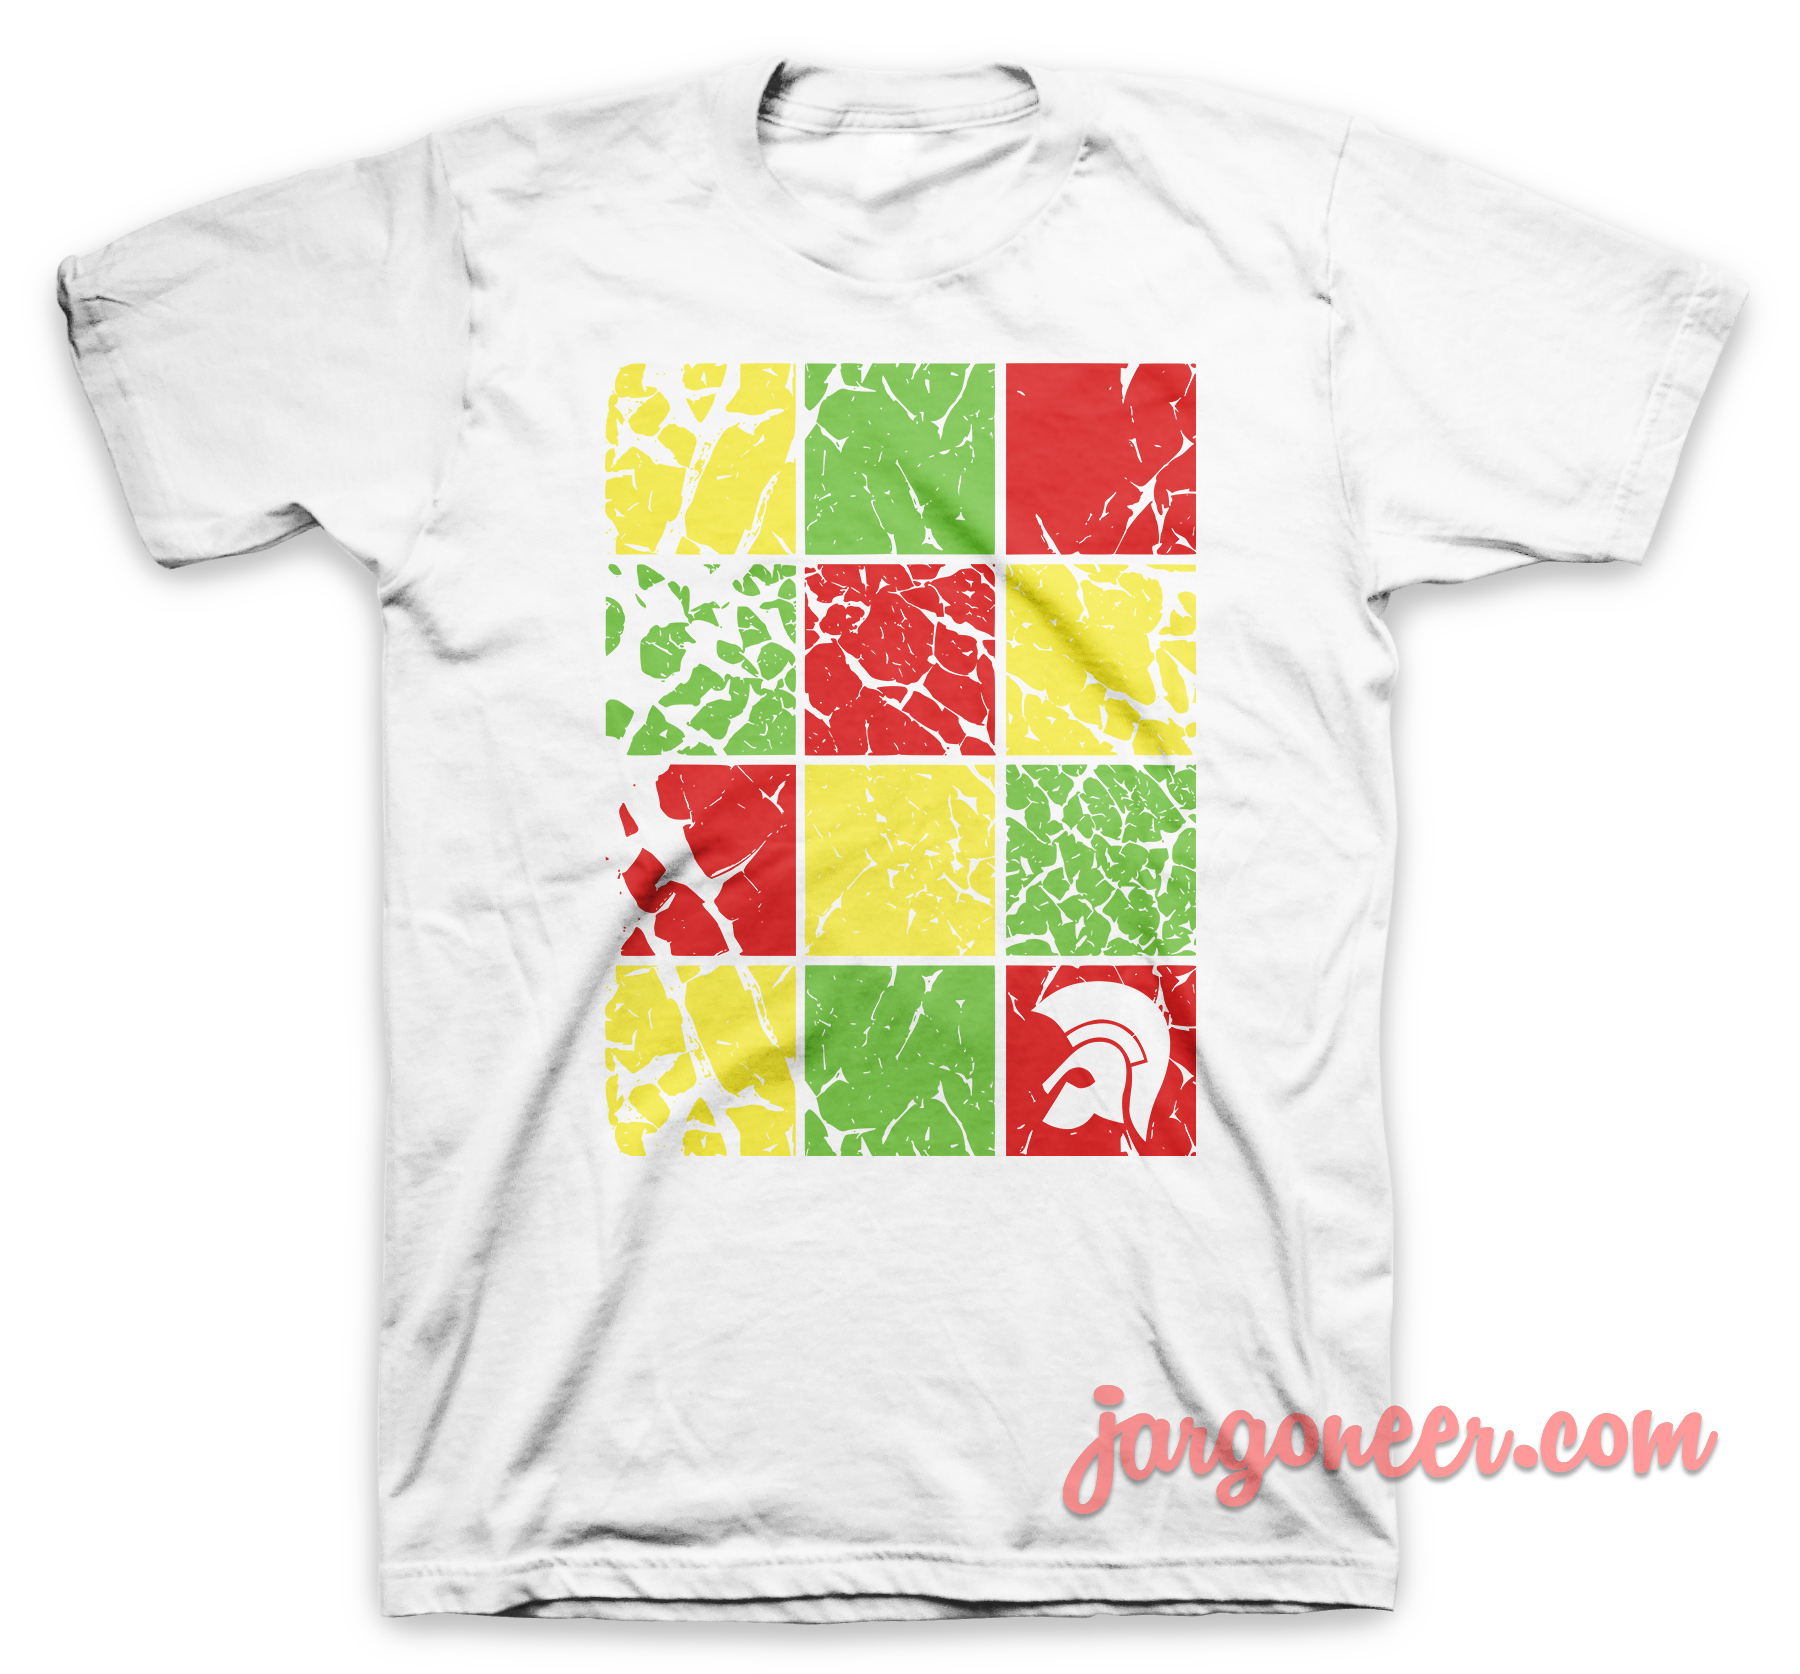 Trojan Checkboard White T Shirt - Shop Unique Graphic Cool Shirt Designs